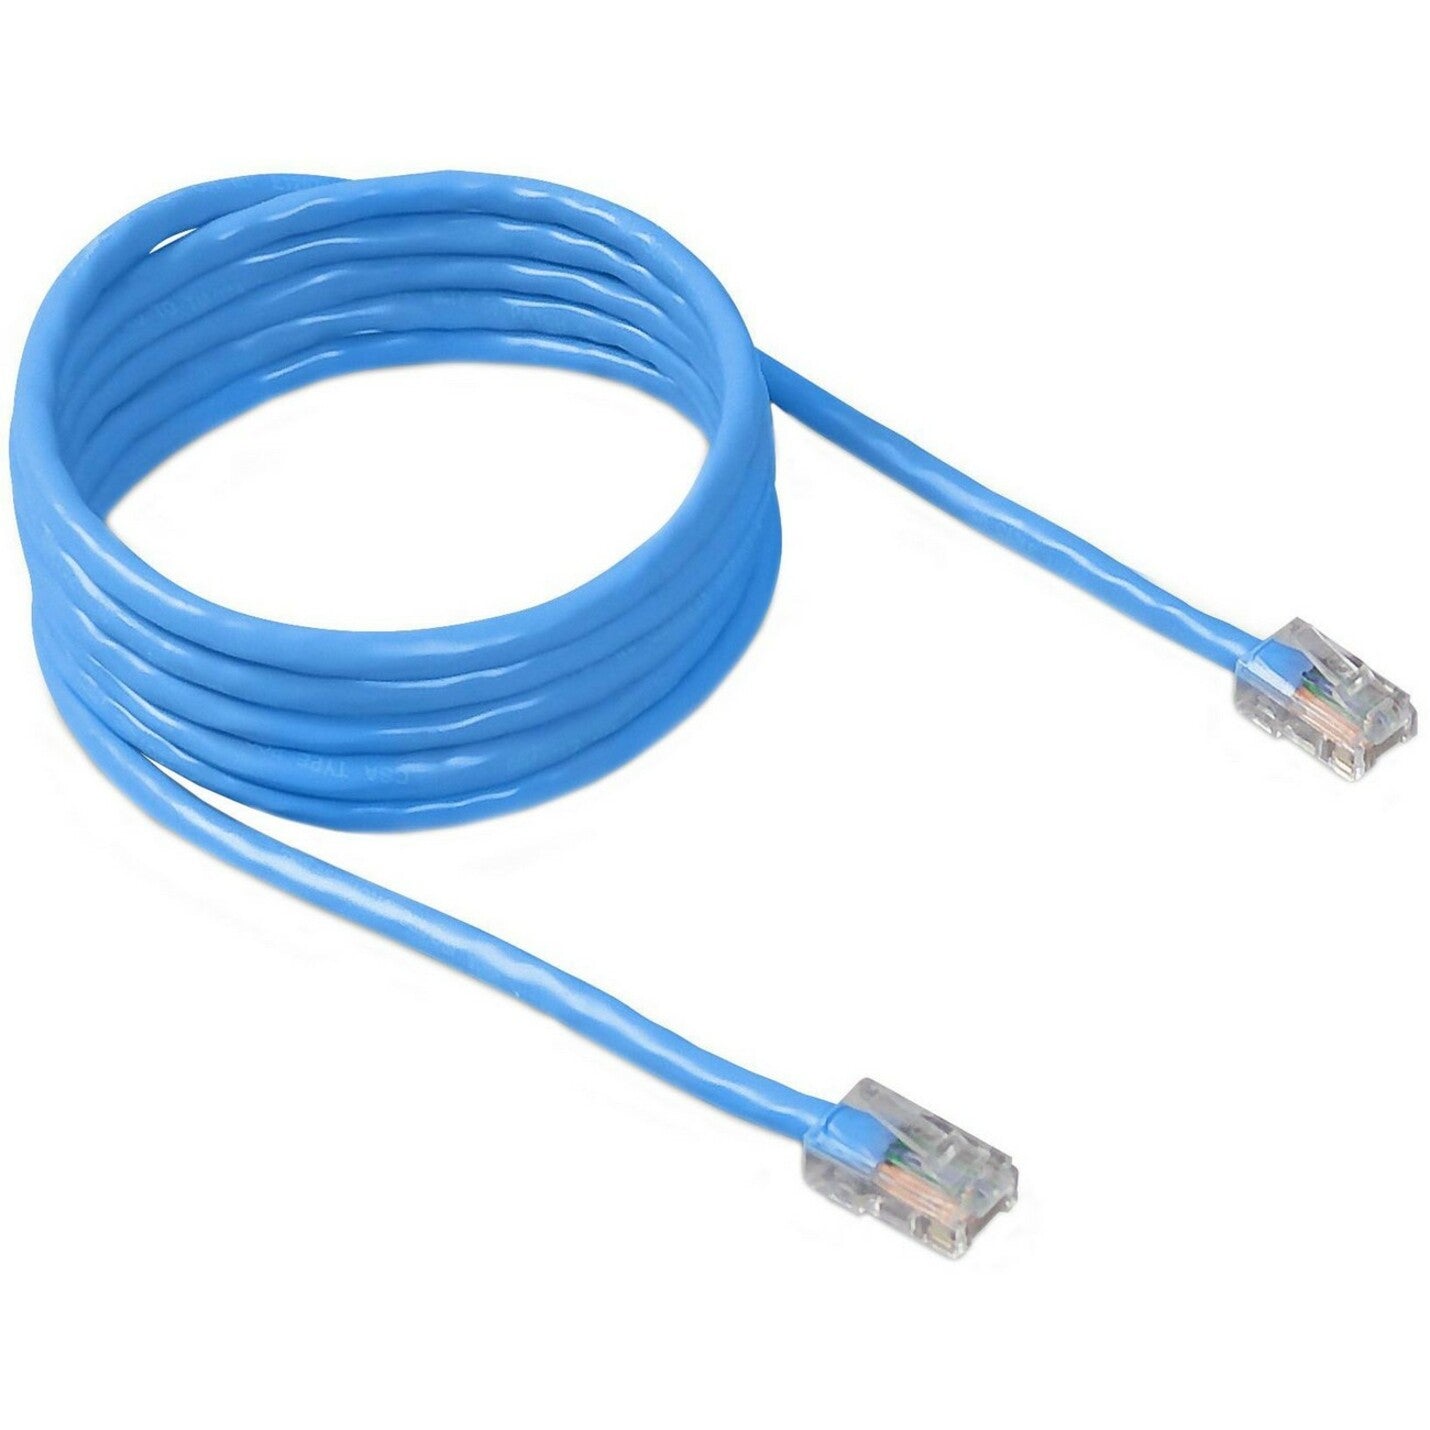 Belkin A3L781-50BL-CDW Cat 5E Patch Cable, 50 ft, Molded, Copper, Blue